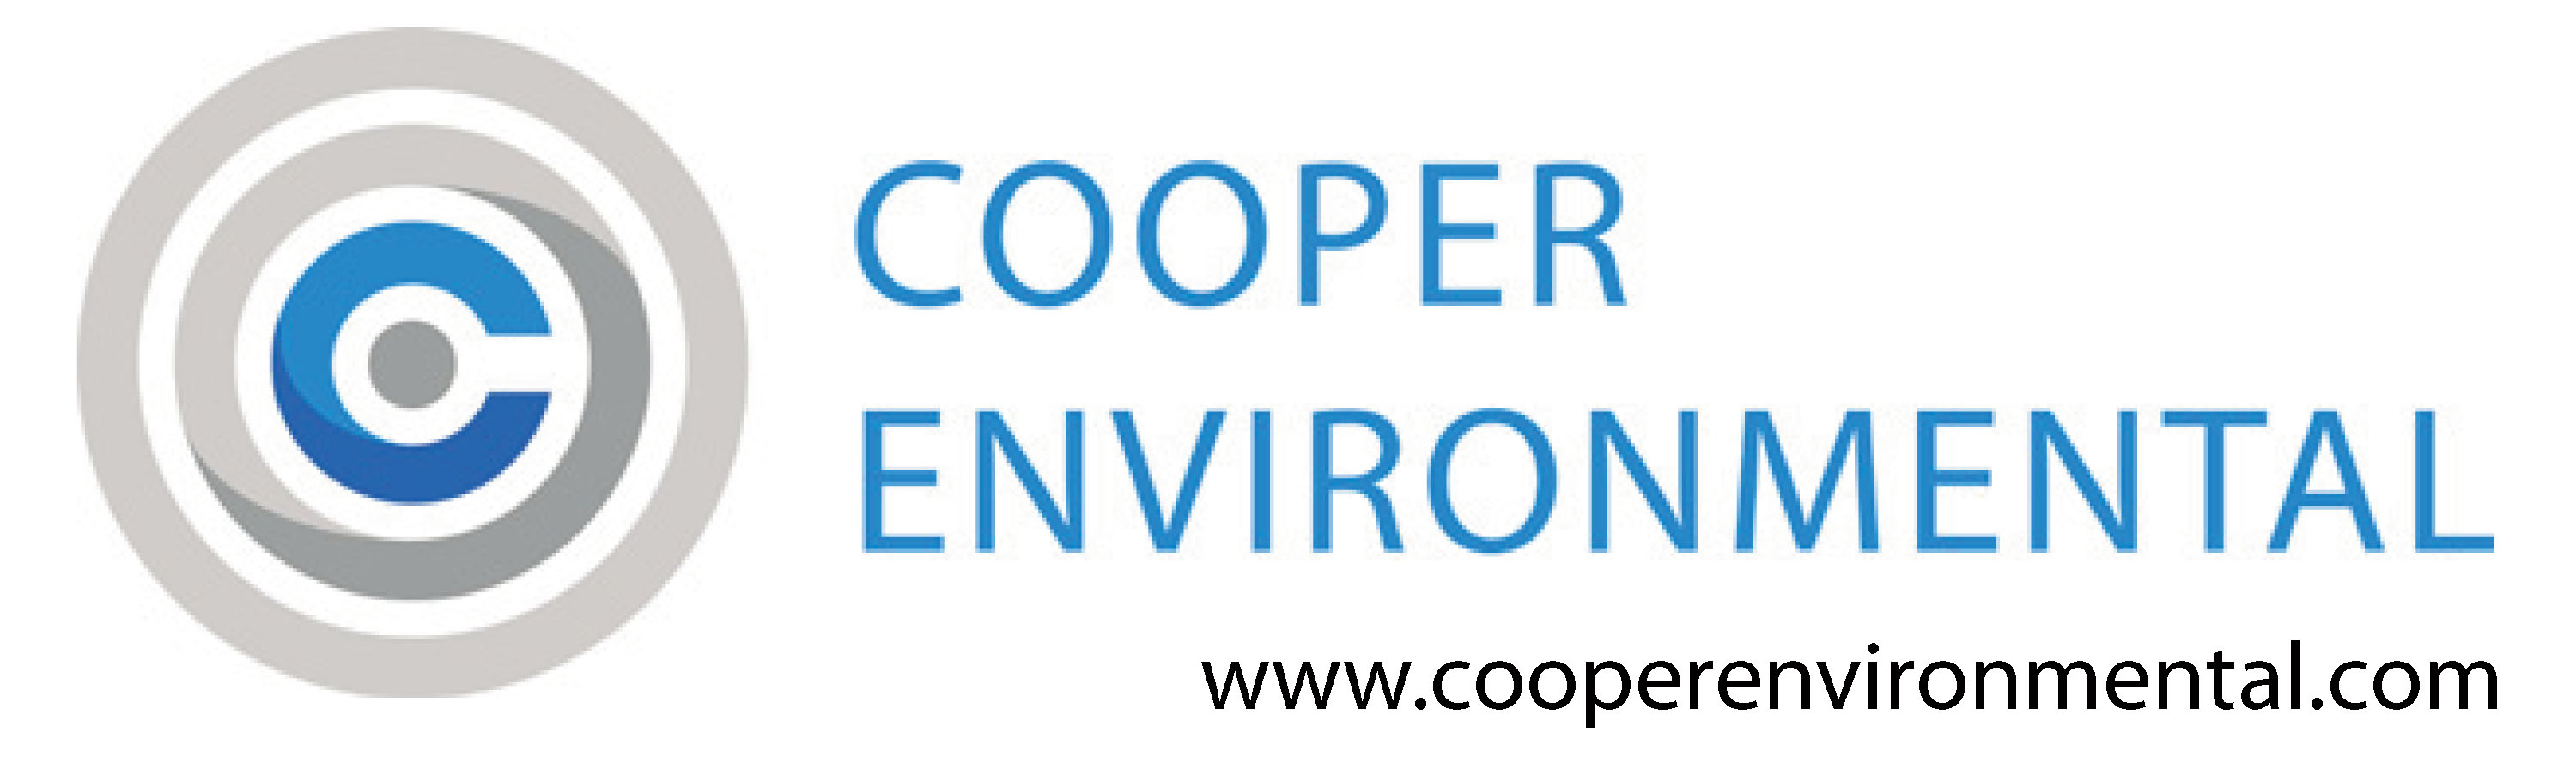 Cooper Envrionmental Service LLC